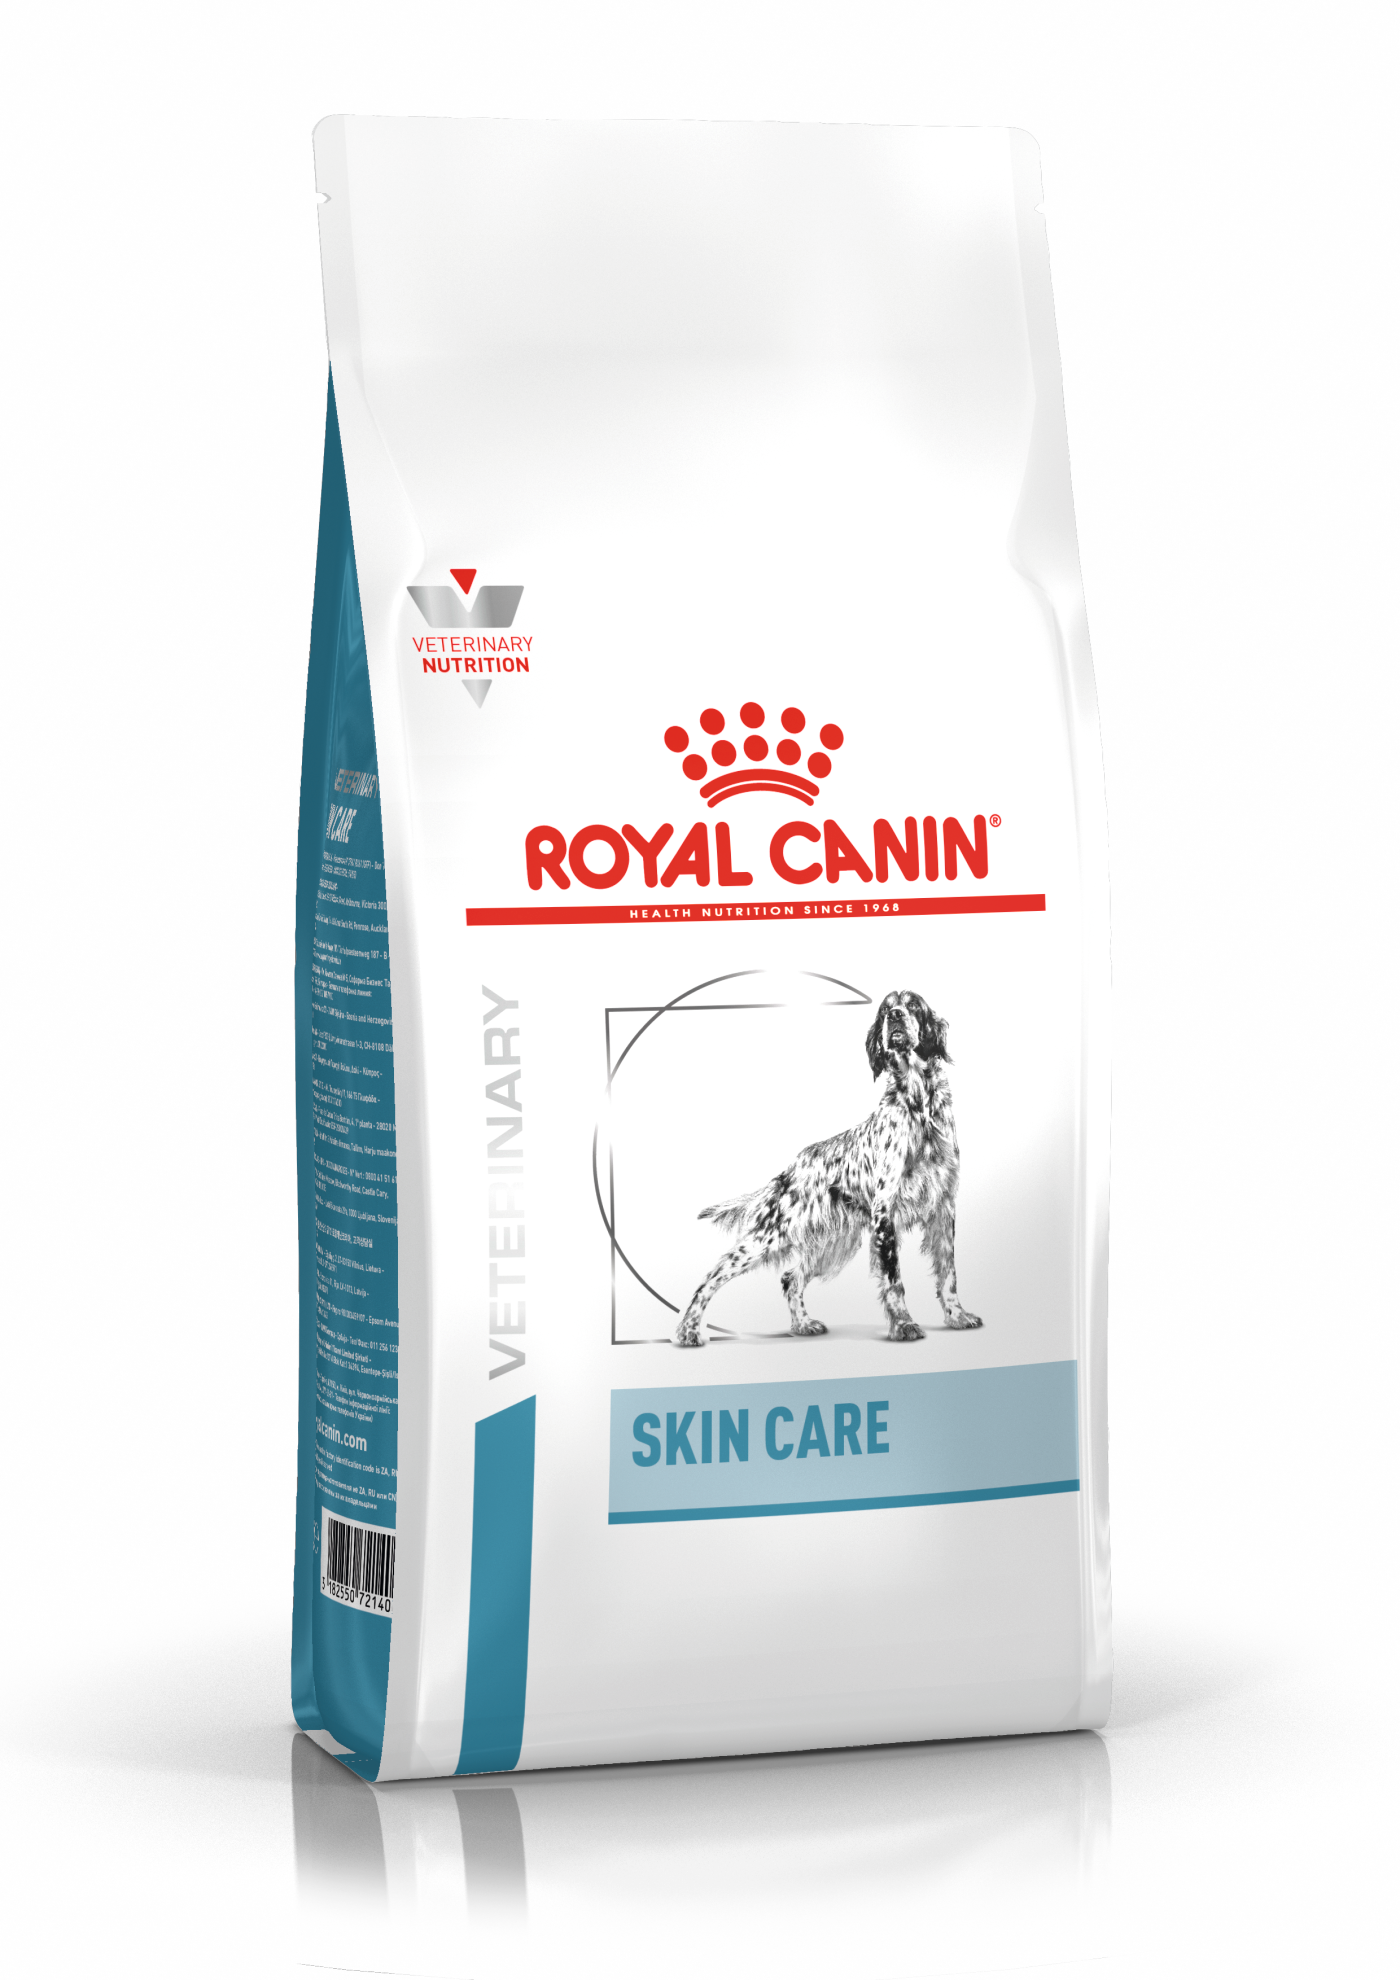 Royal Canin Skin Care hond 2x 11 kg